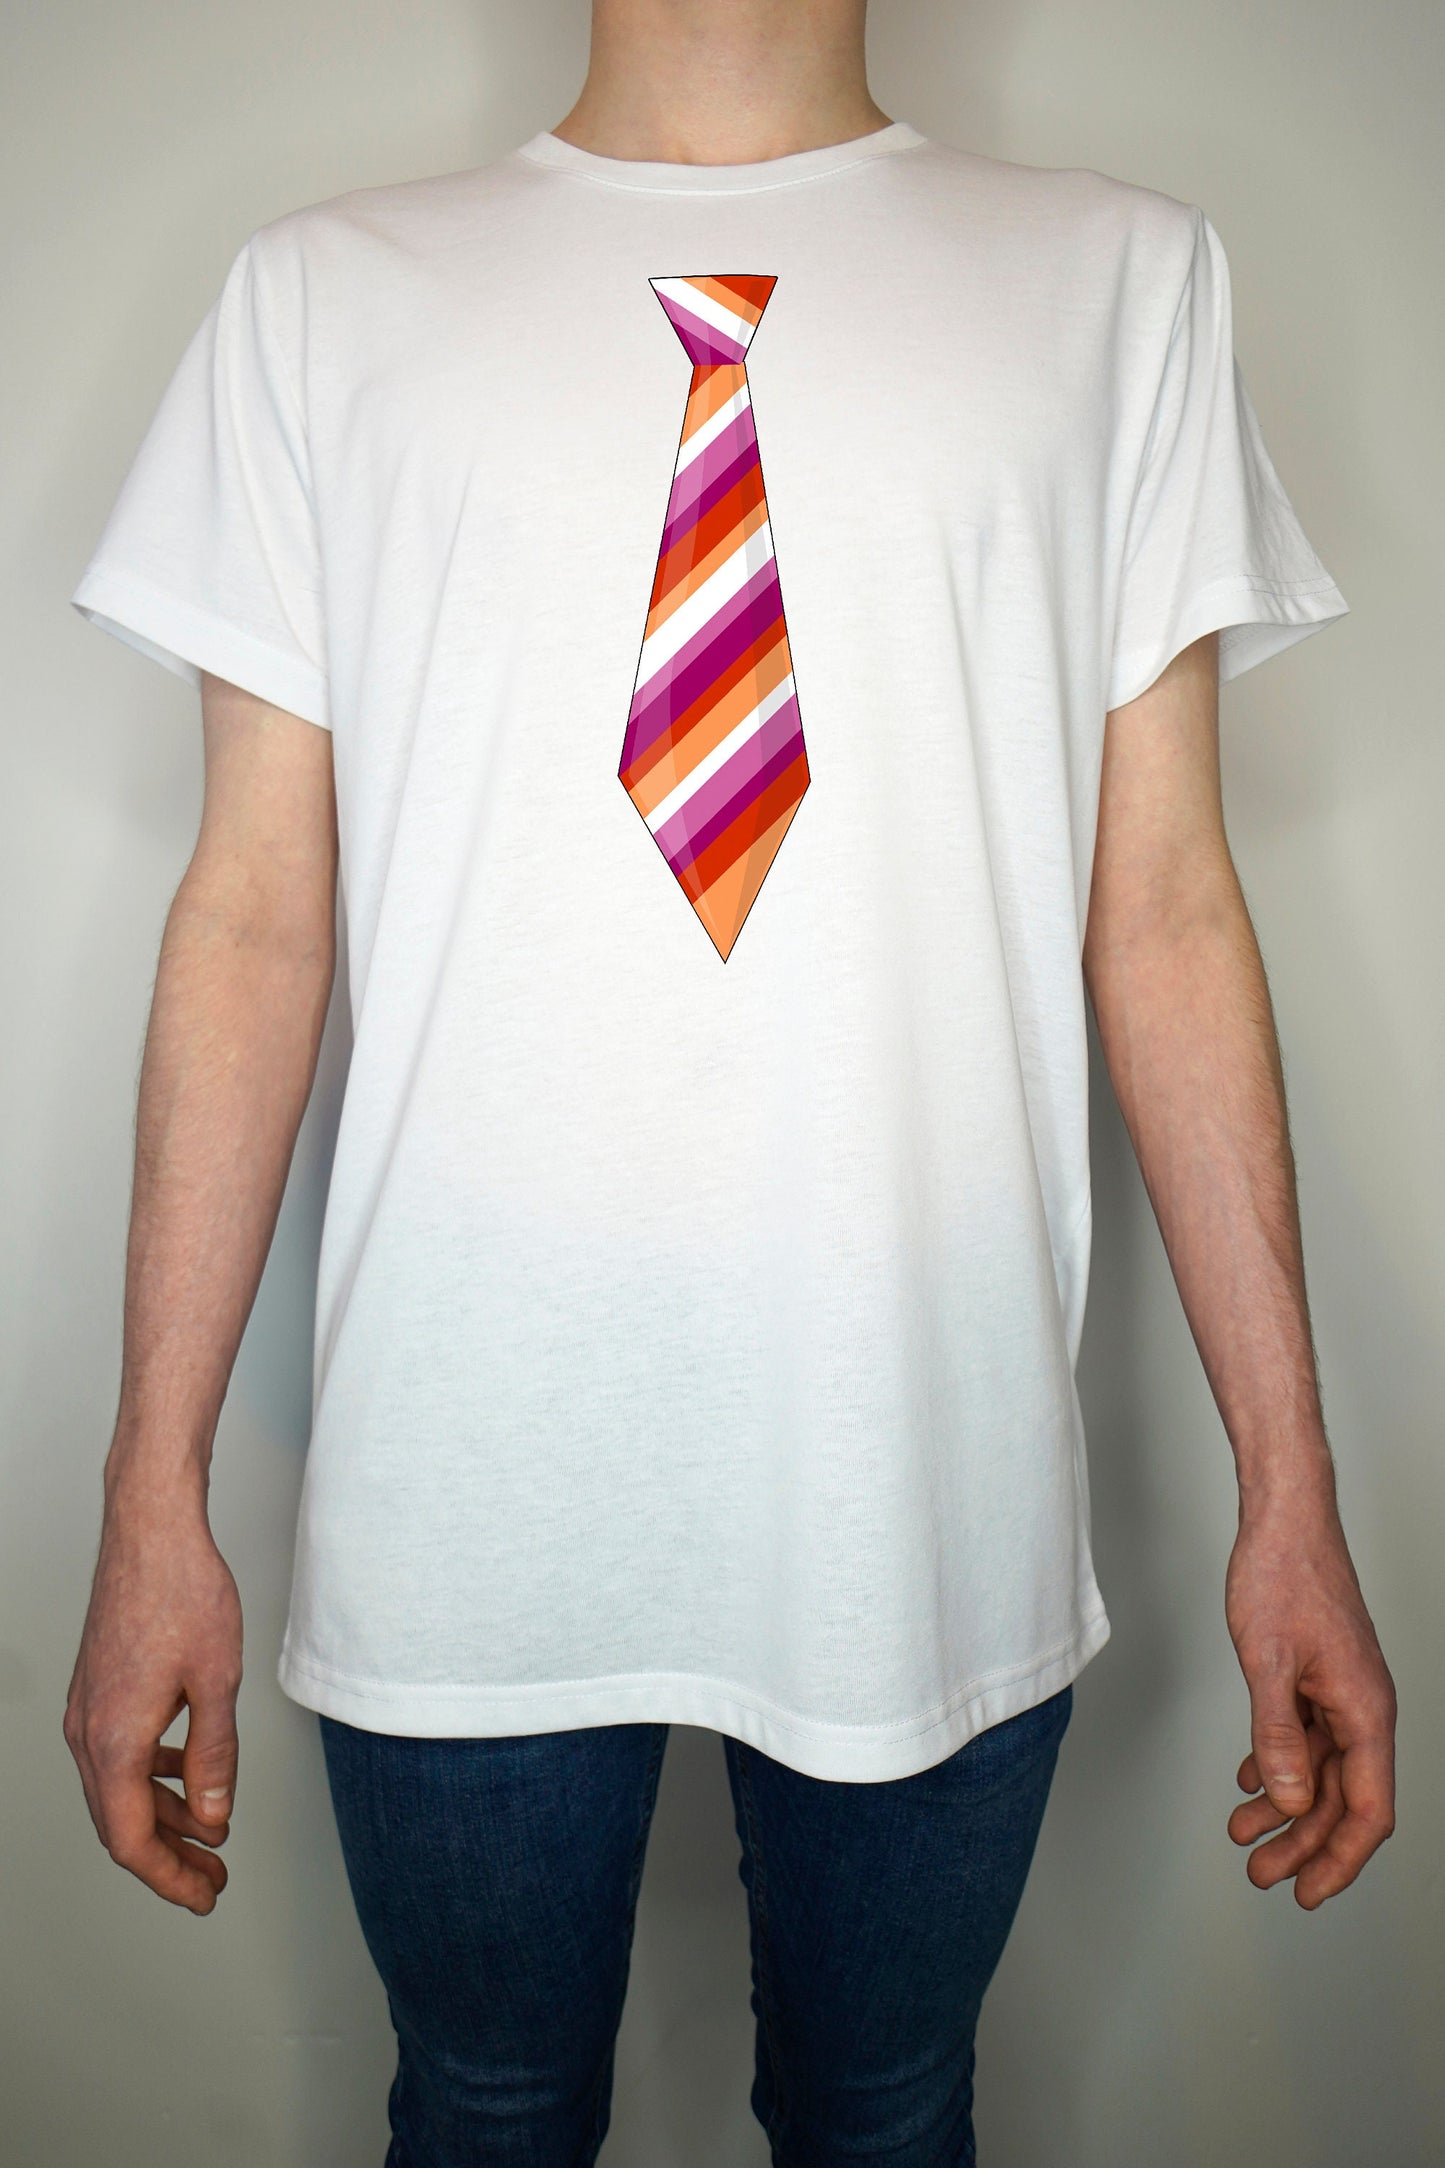 Lesbian Pride T shirt - Rainbow pride flag LGBT gay bi transgender lesbian - Premium Quality Summer Light weight 65/35 Polyester Cotton